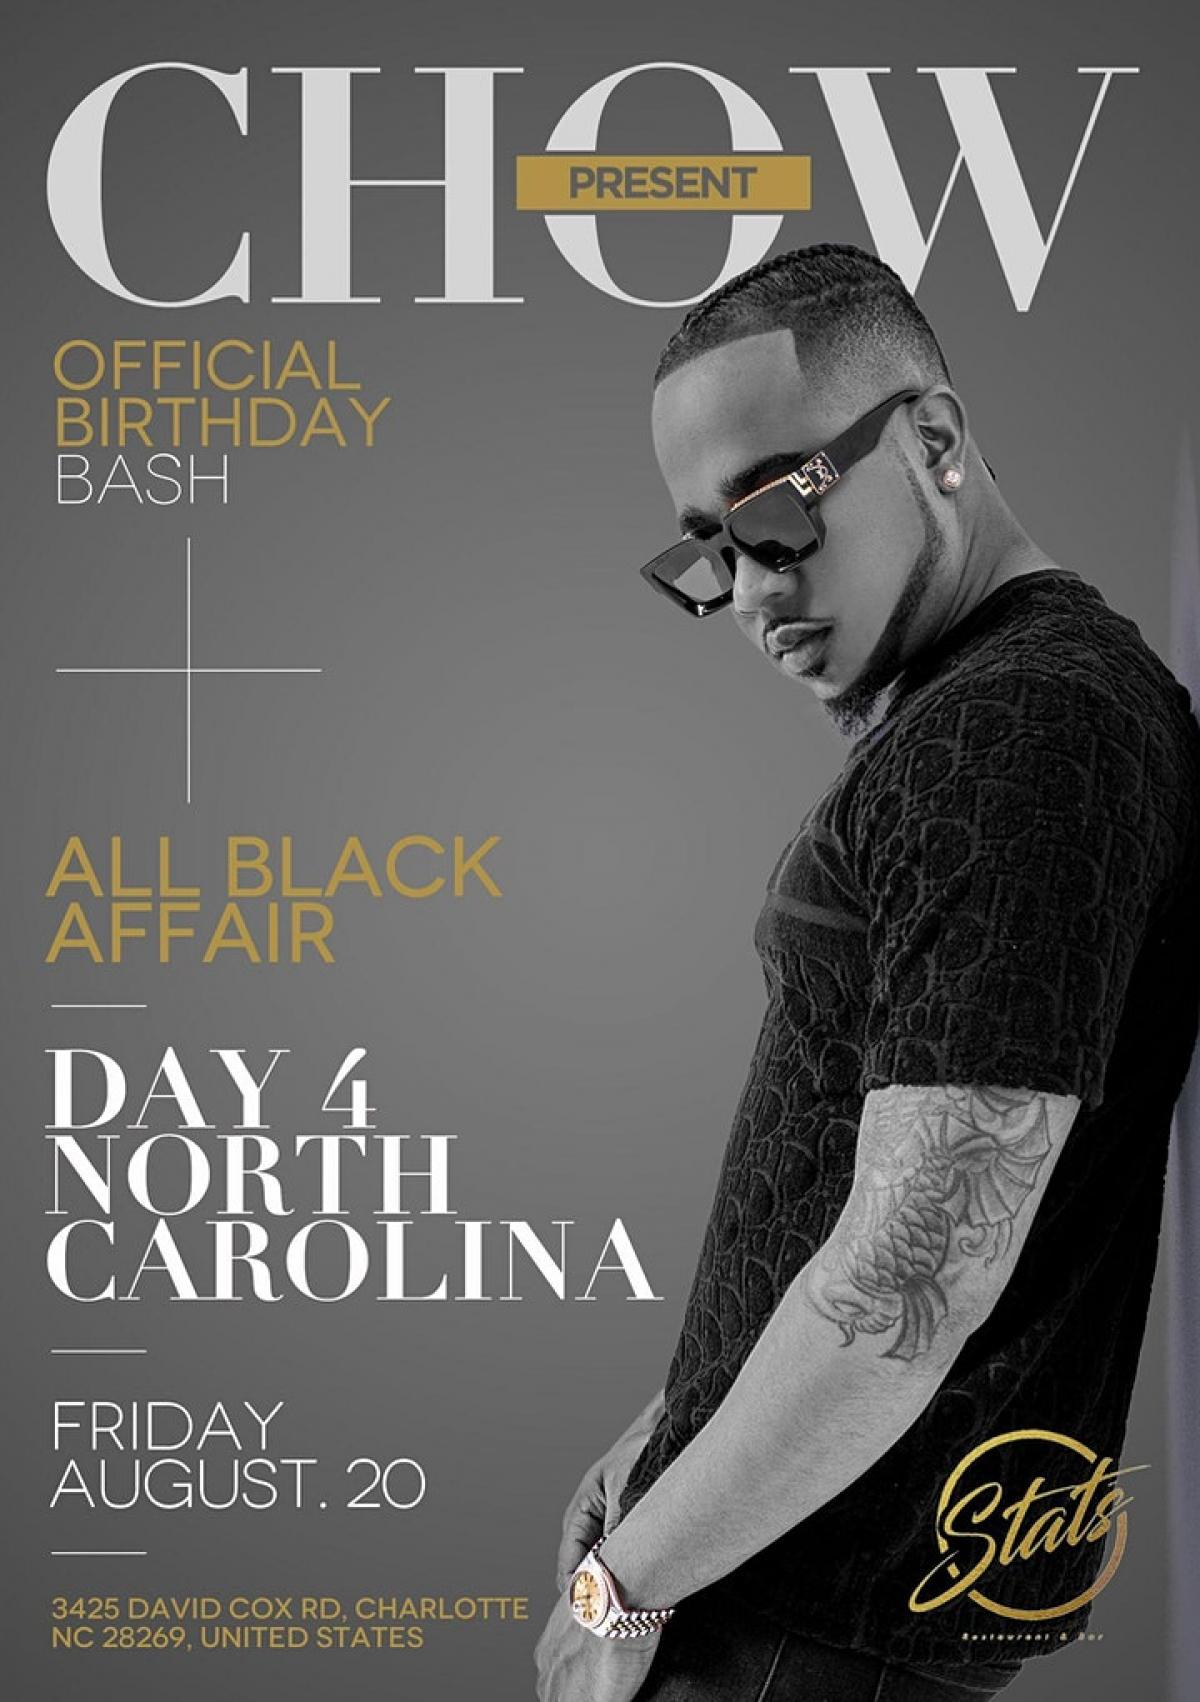 Dj Young Chow Birthday Bash NC: All Black Affair flyer or graphic.